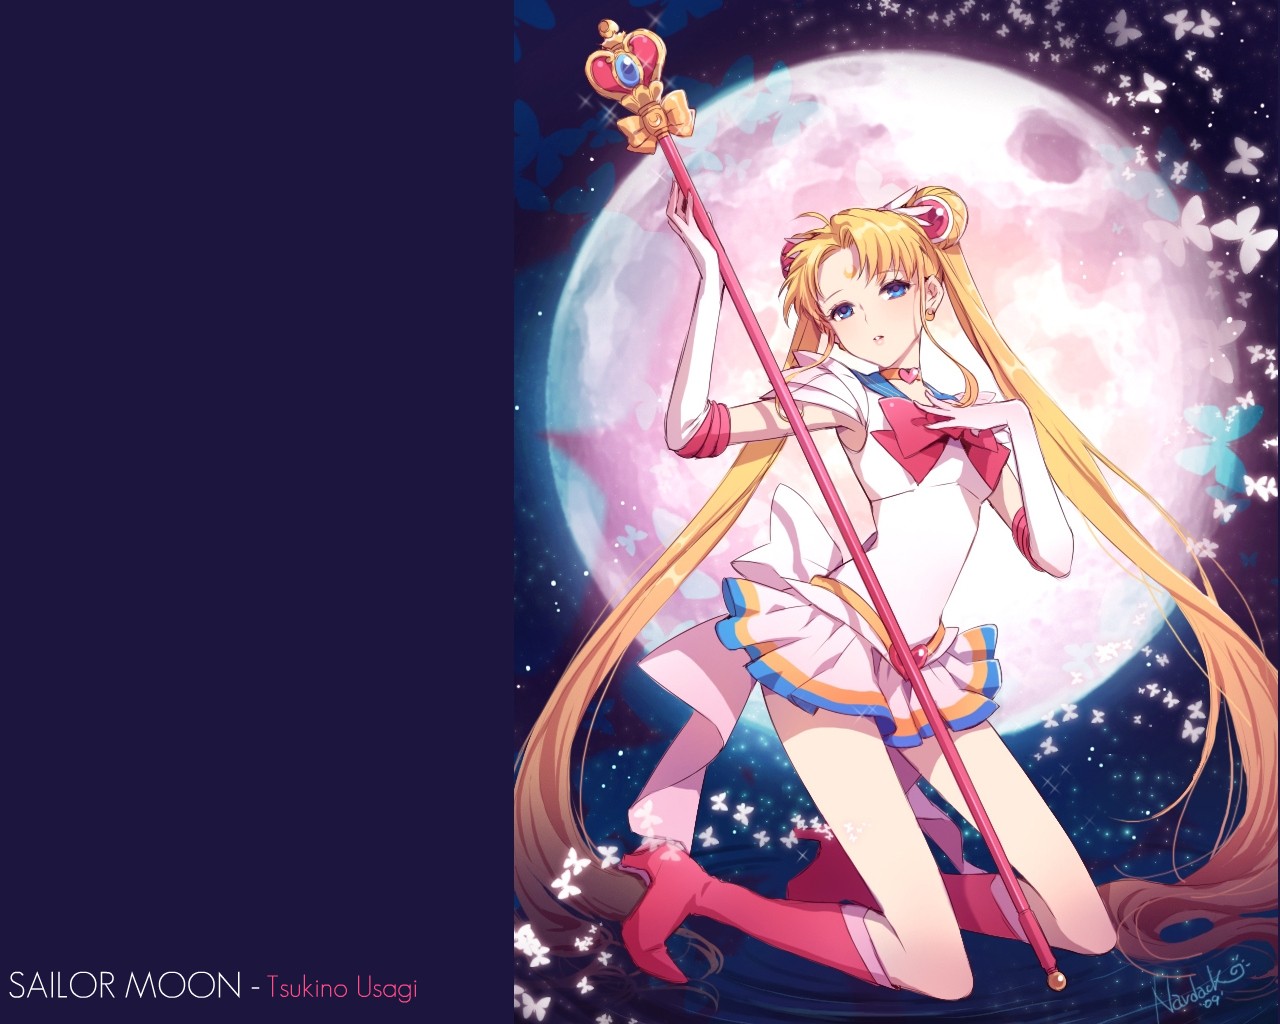 Anime 1280x1024 Tsukino Usagi anime girls anime kneeling blonde long hair blue hair Moon looking at viewer fantasy art fantasy girl staff Sailor Moon Sailor Moon (Character)